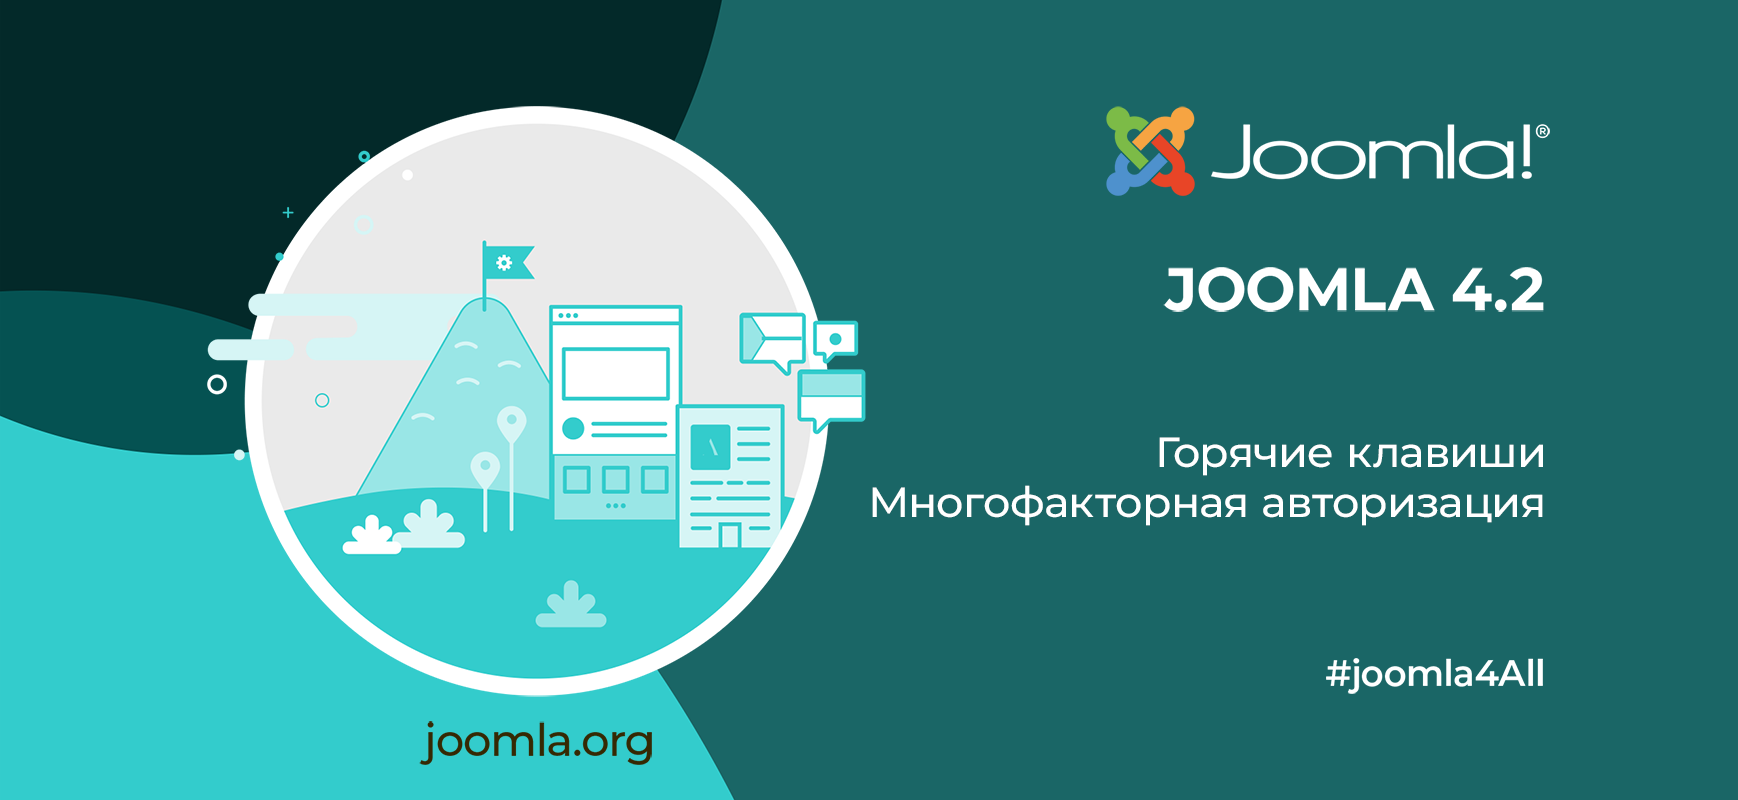 Вышел релиз Joomla 4.2